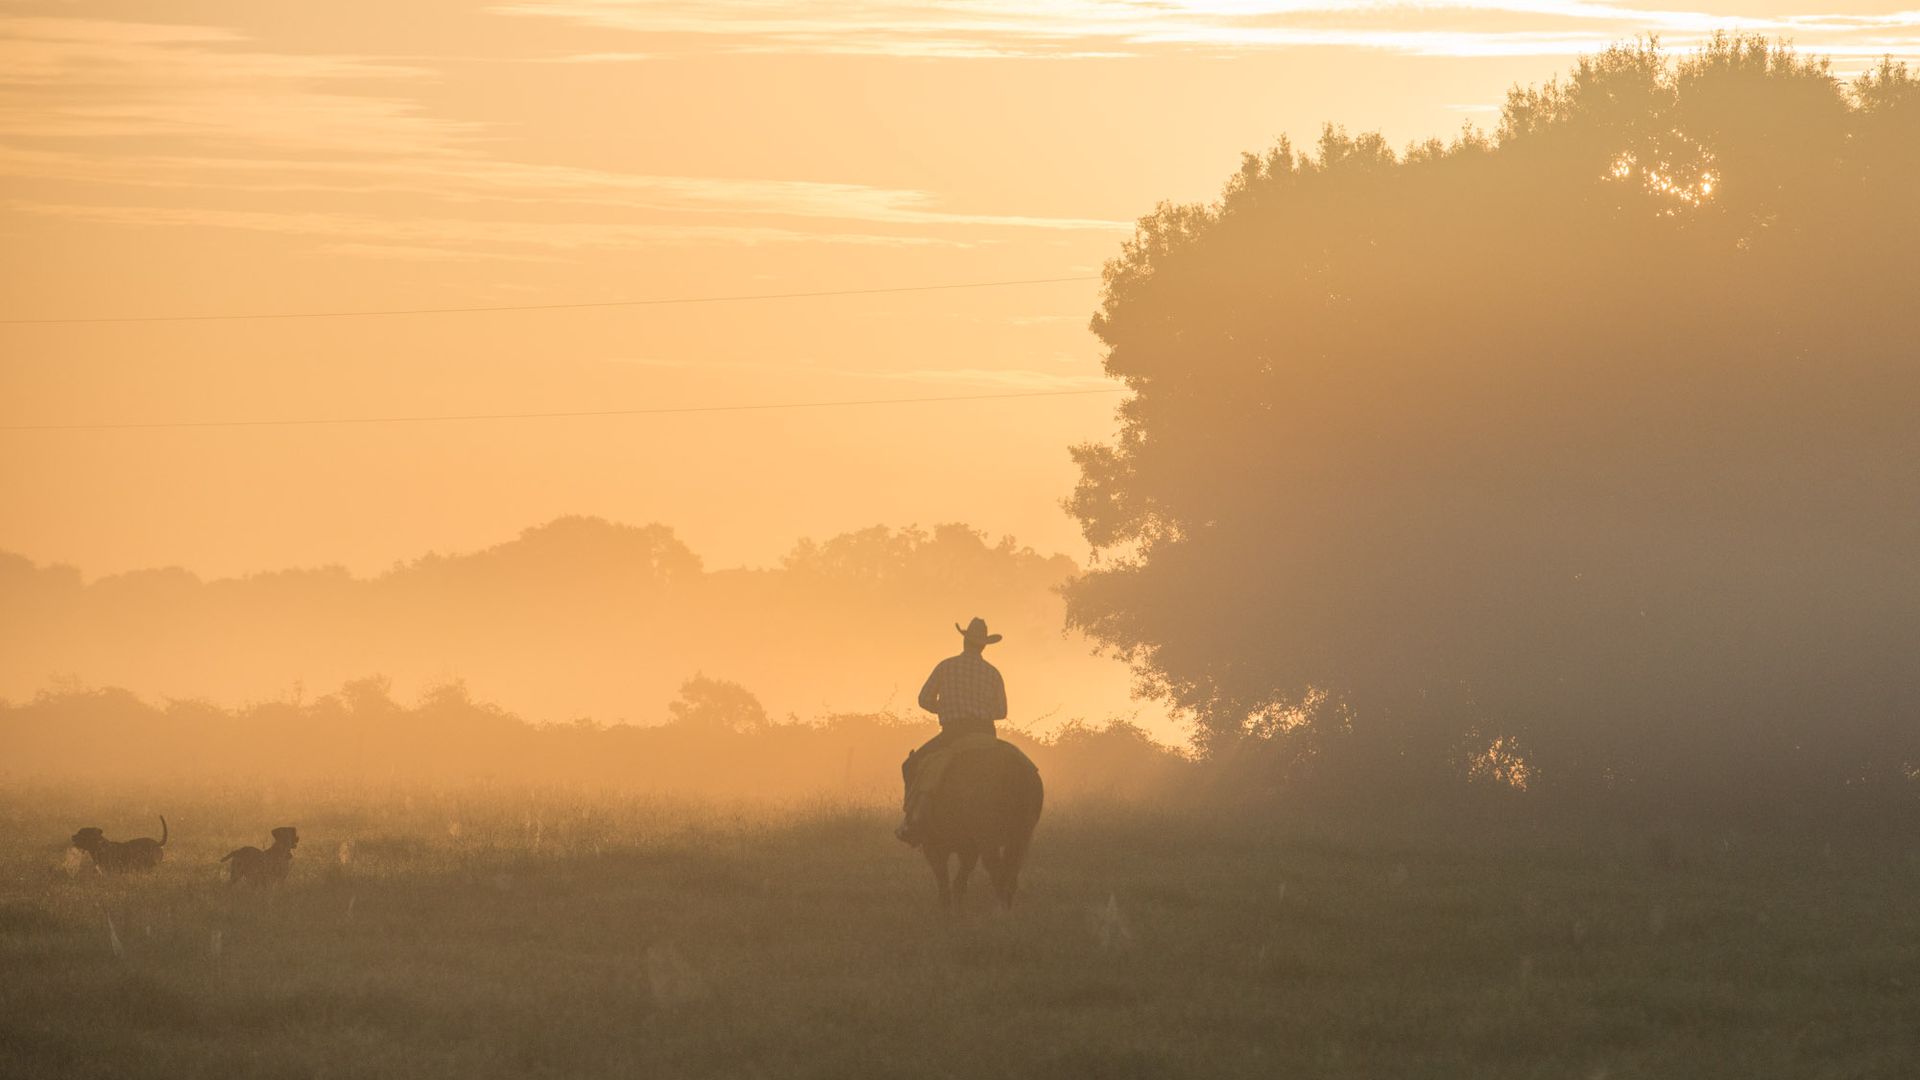 A cowboy rides across a Florida field.